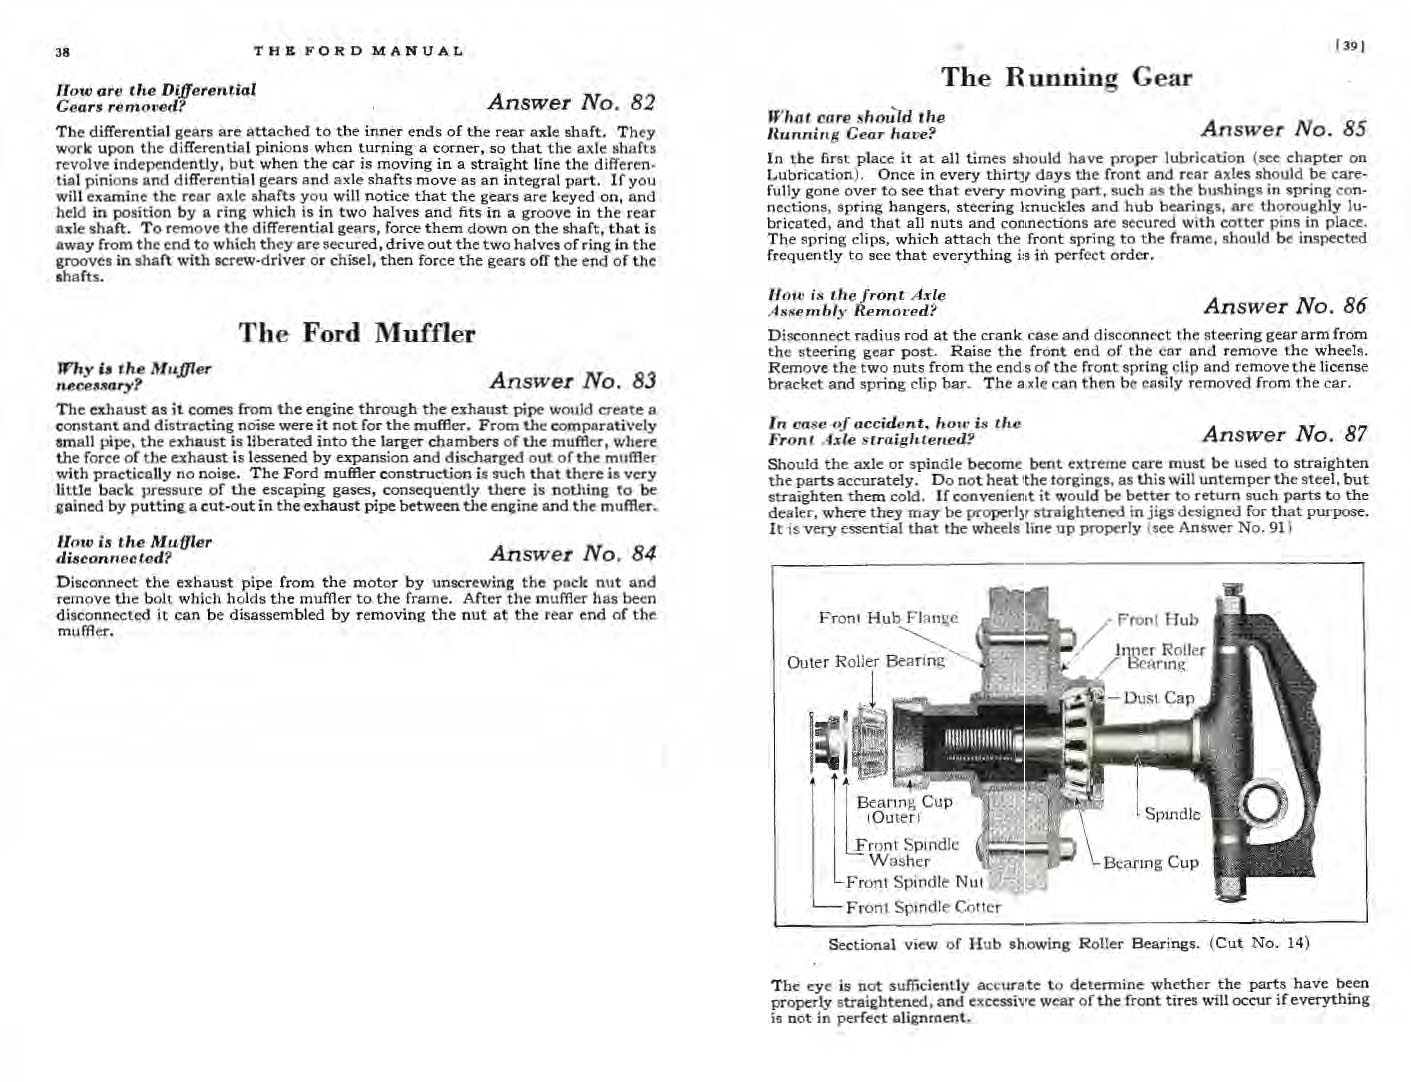 n_1926 Ford Owners Manual-38-39.jpg